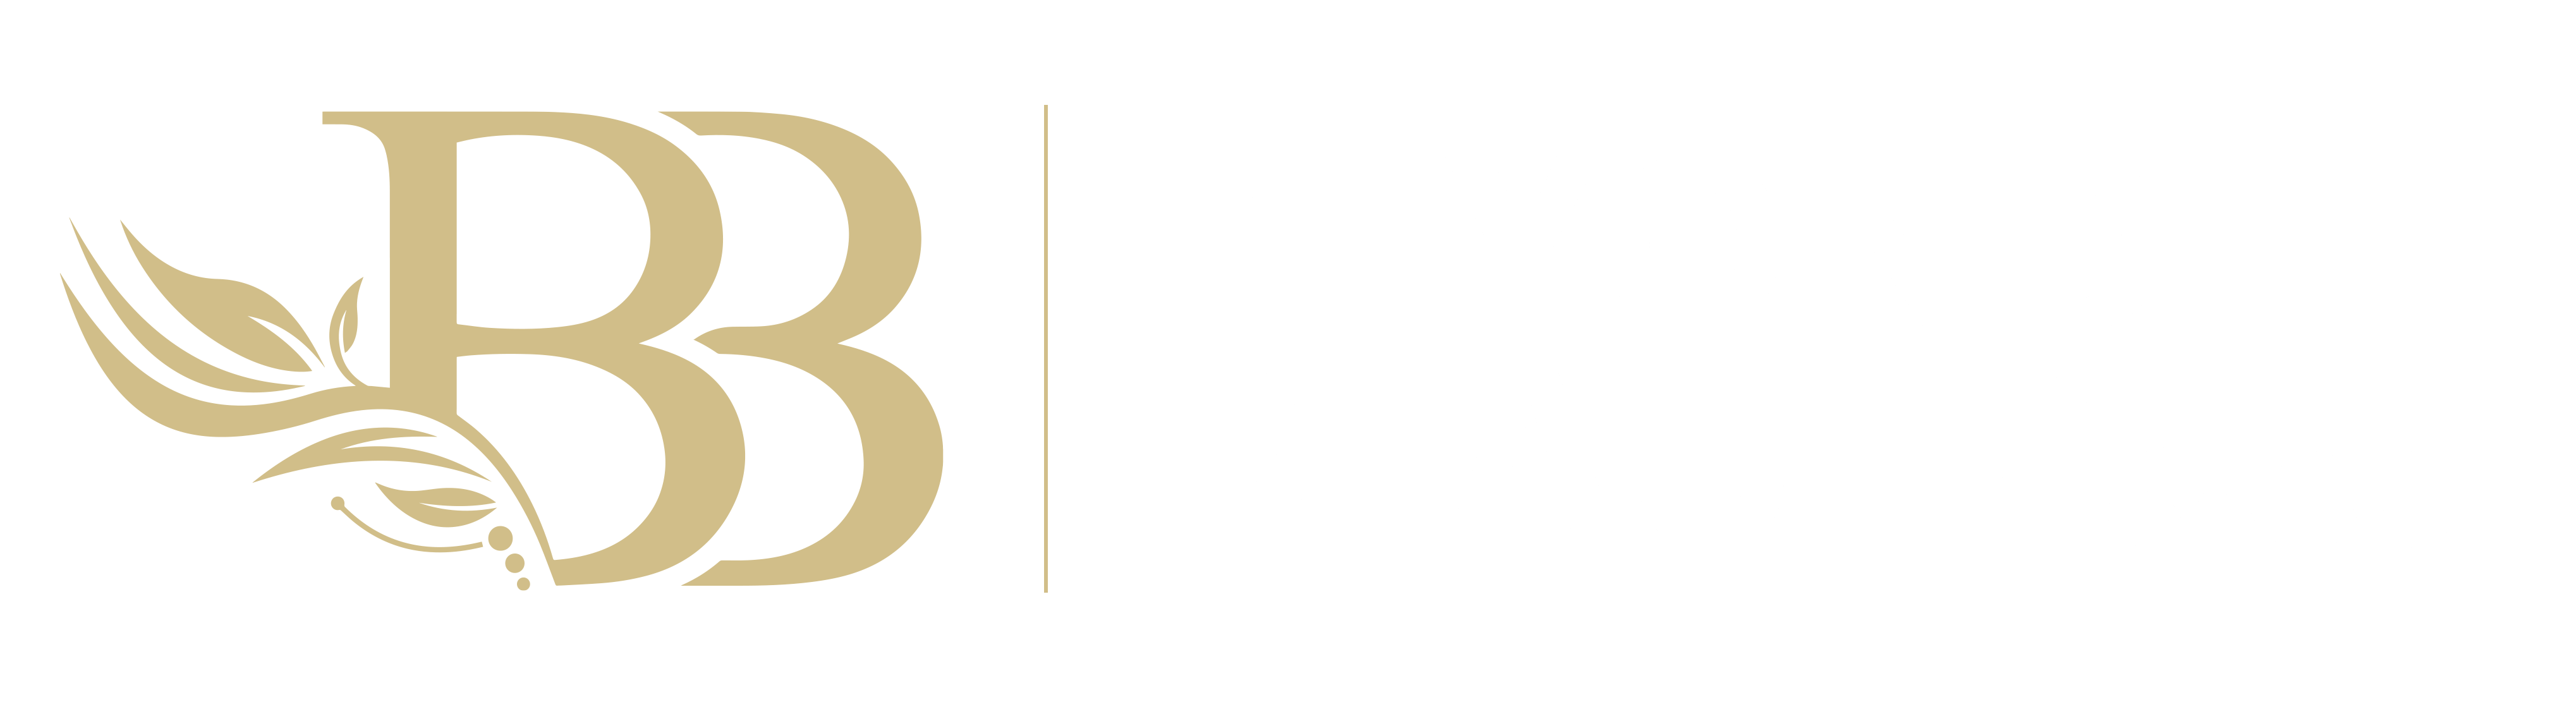 Beyond Beauty&co